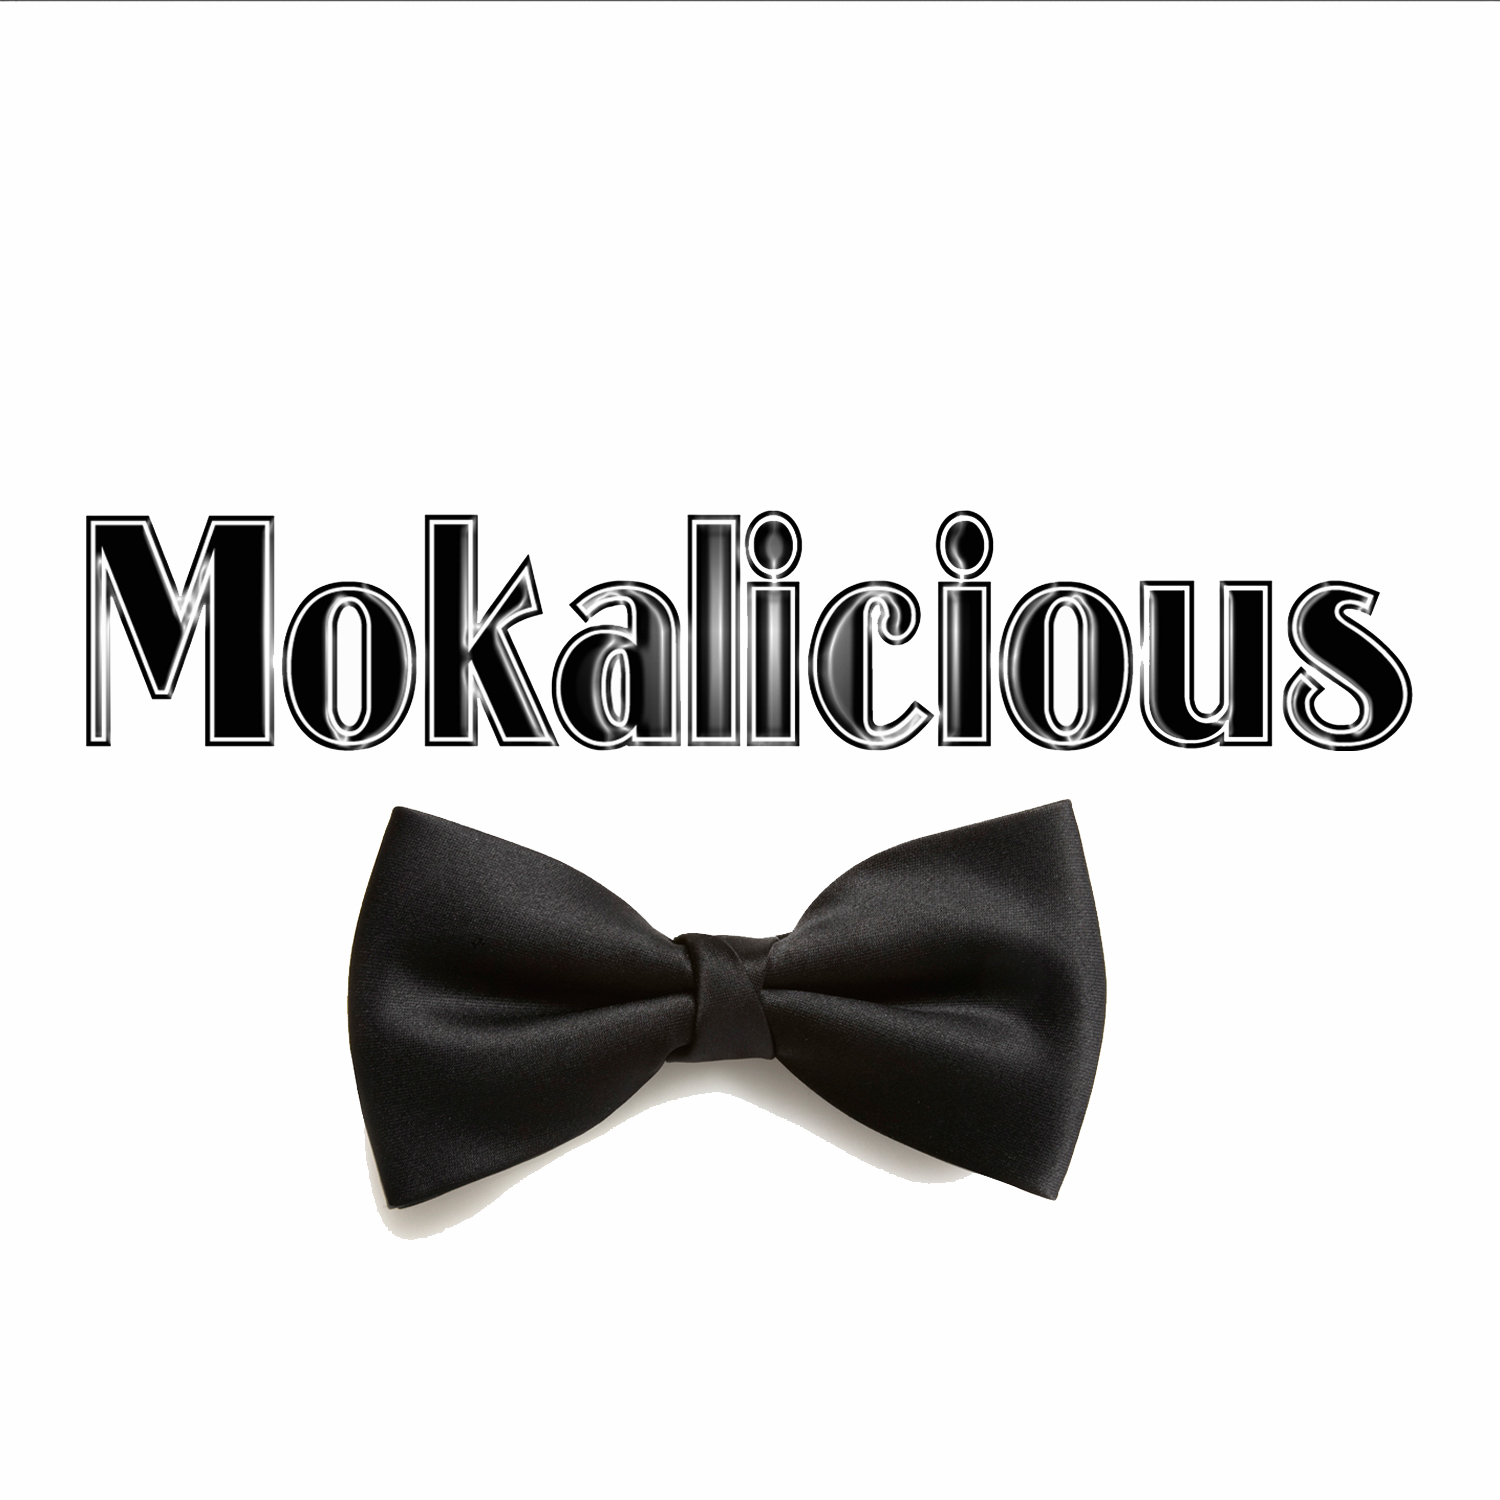 Mokalicious